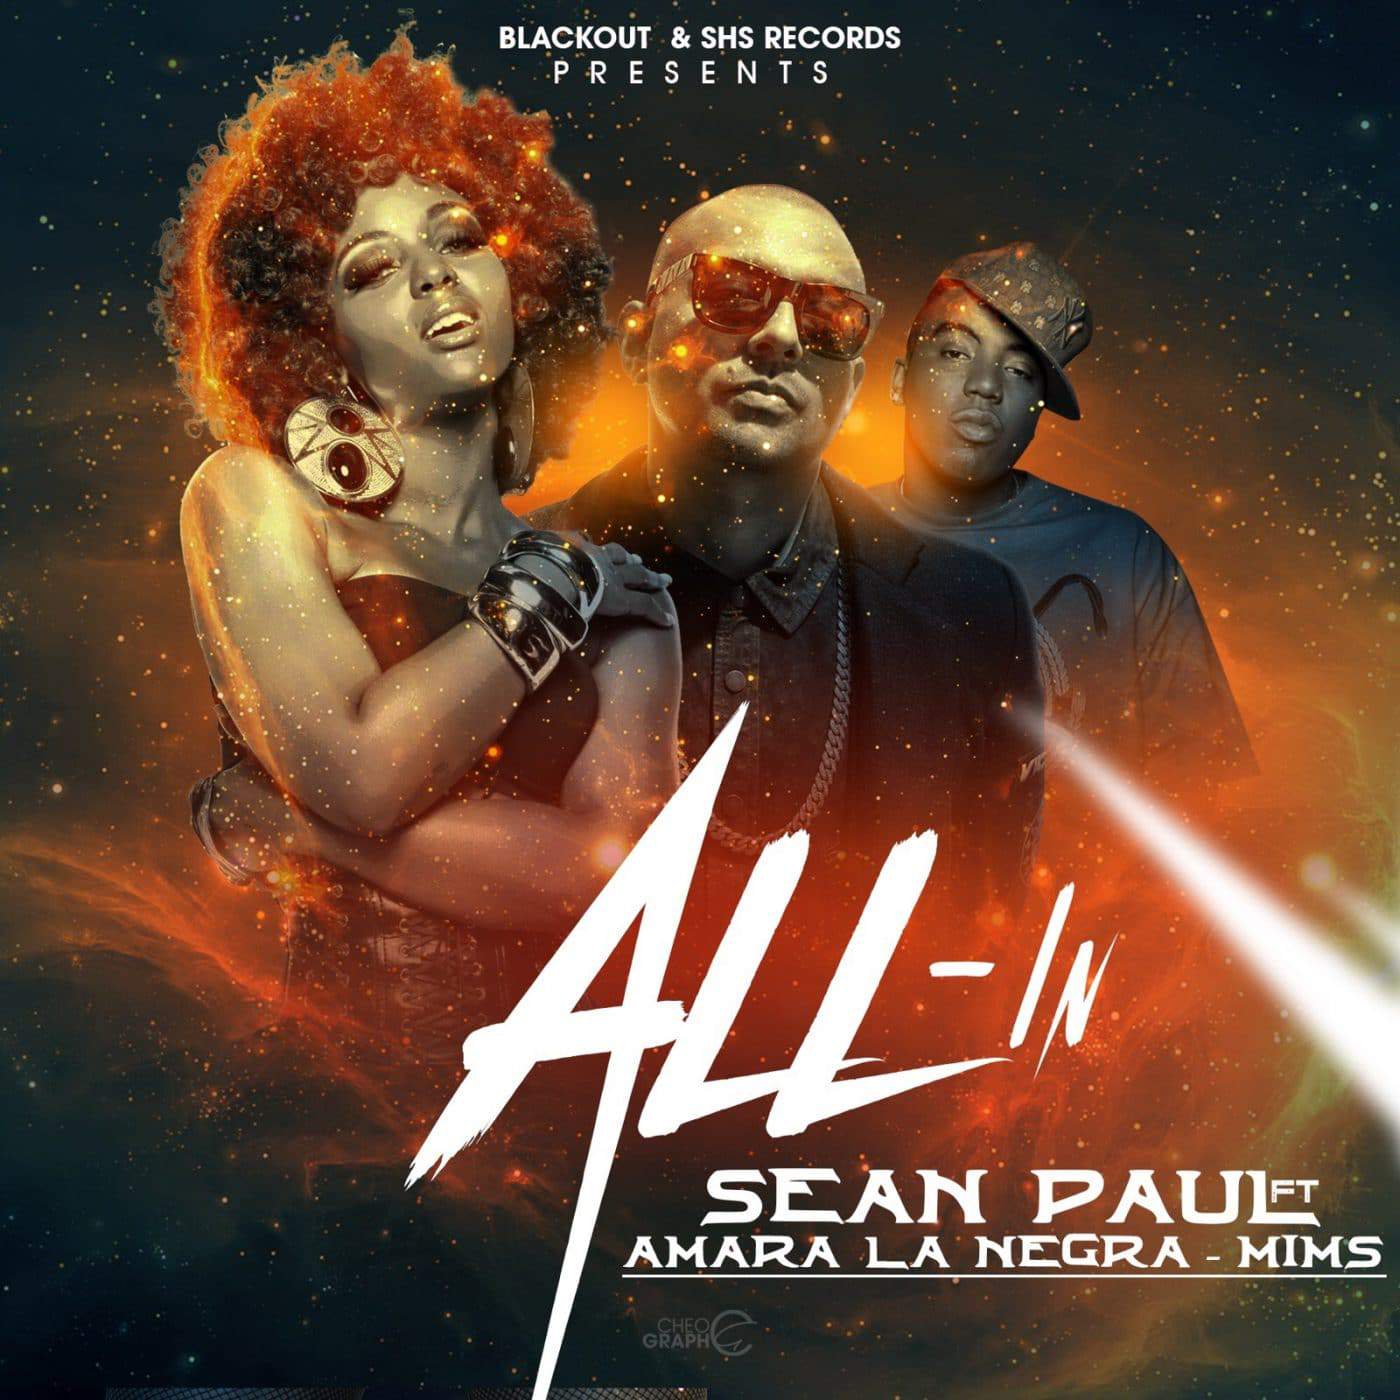 Sean Paul featuring Amara La Negra & Mims - All In - SHS Riddim - Blackout Music & SHS Records